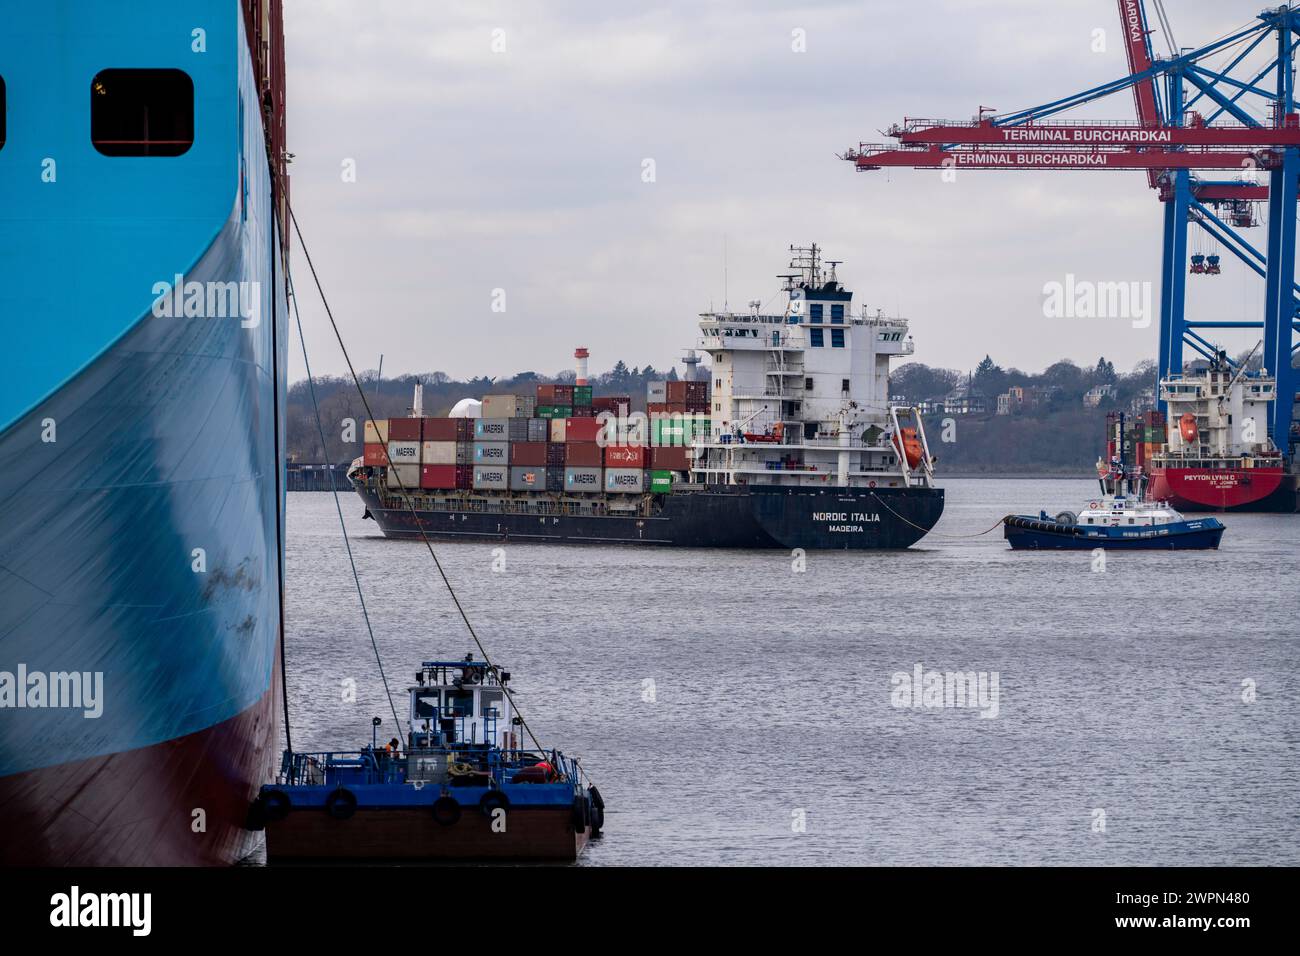 Feeder vessel, Nordic Italia leaves EUROGATE Container Terminal, Waltershofer Hafen, Hamburg, Germany Stock Photo